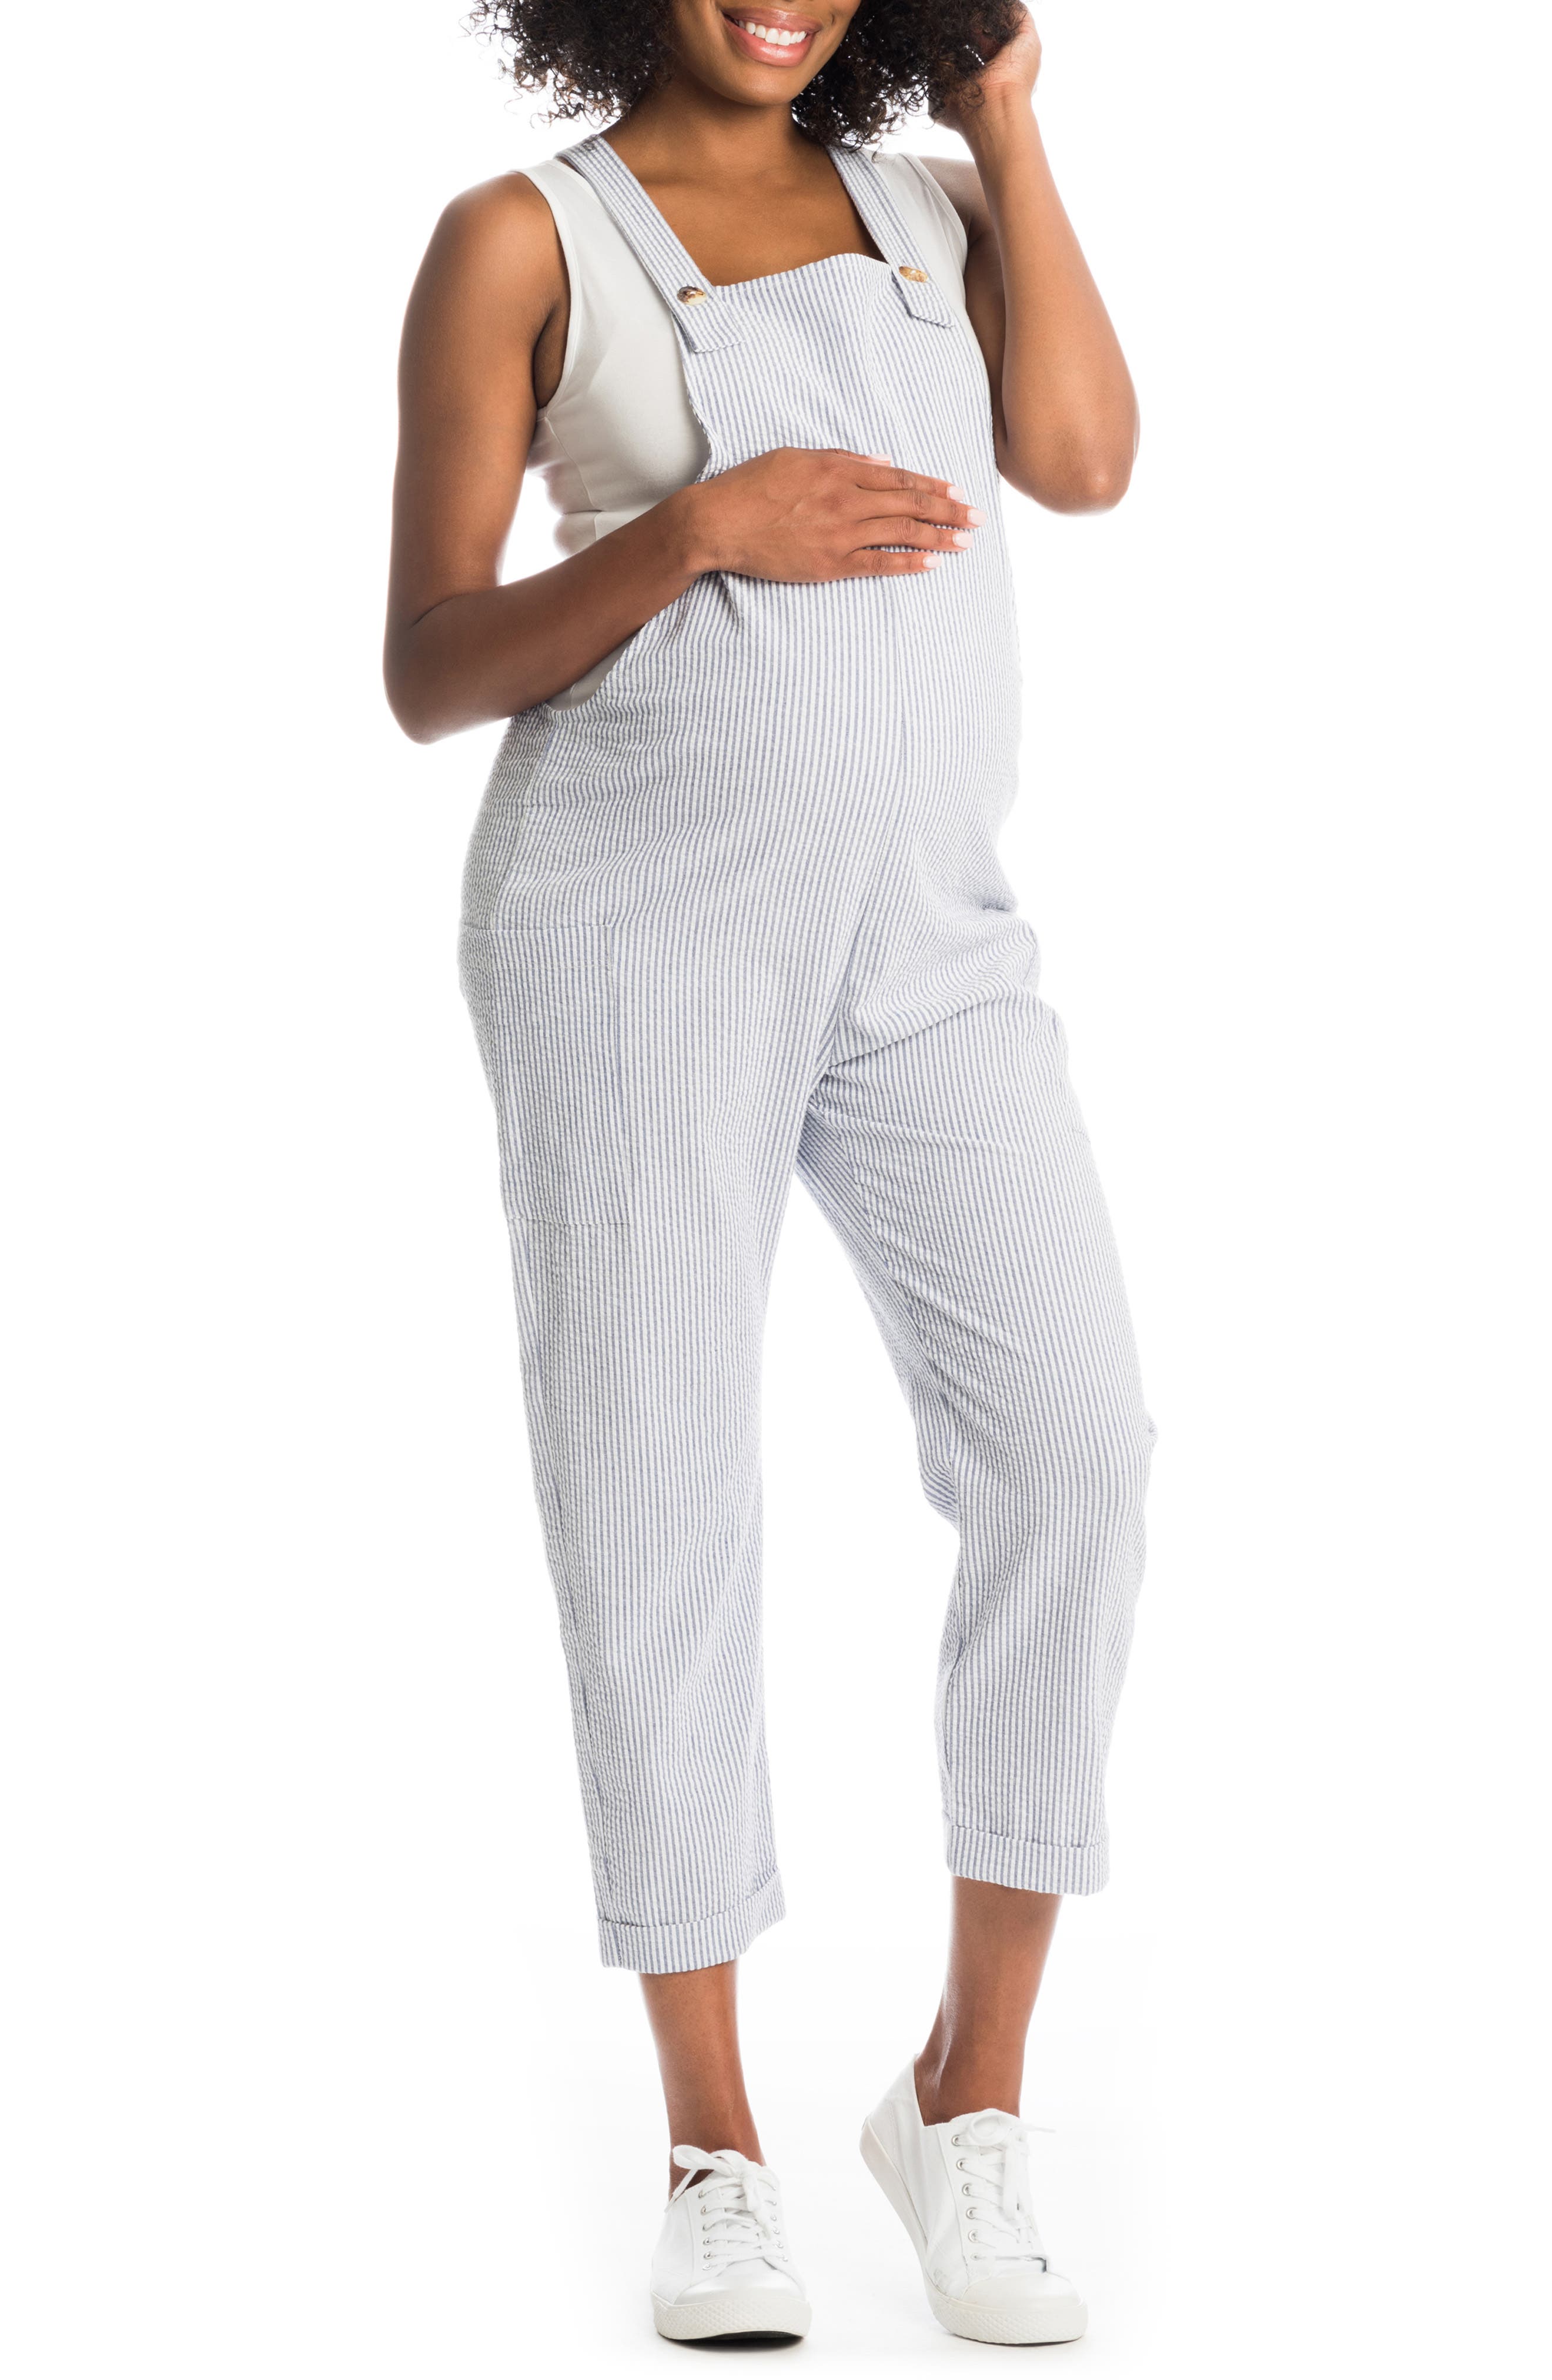 Everly Grey Nani Maternity/Nursing Seersucker Overalls in Royal Stripe